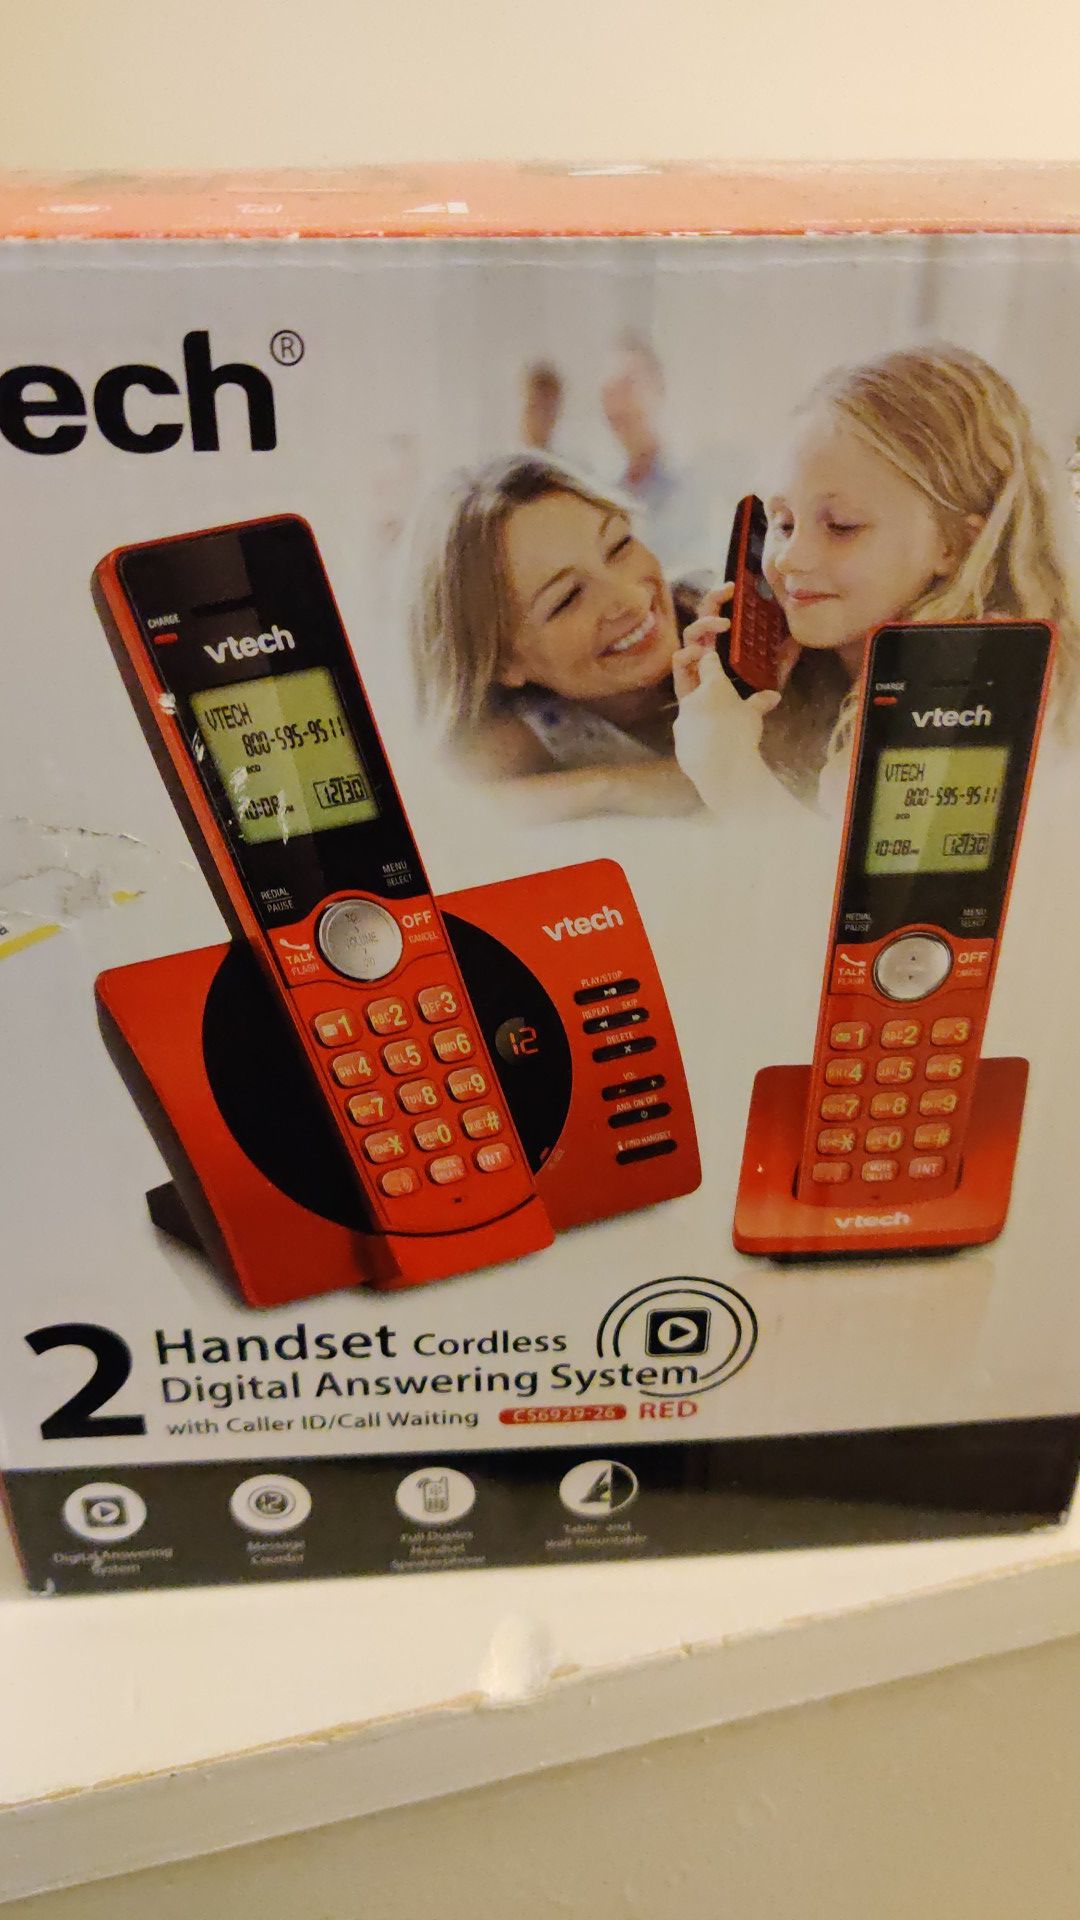 VTech handset cordless digital answering system brand new never opened